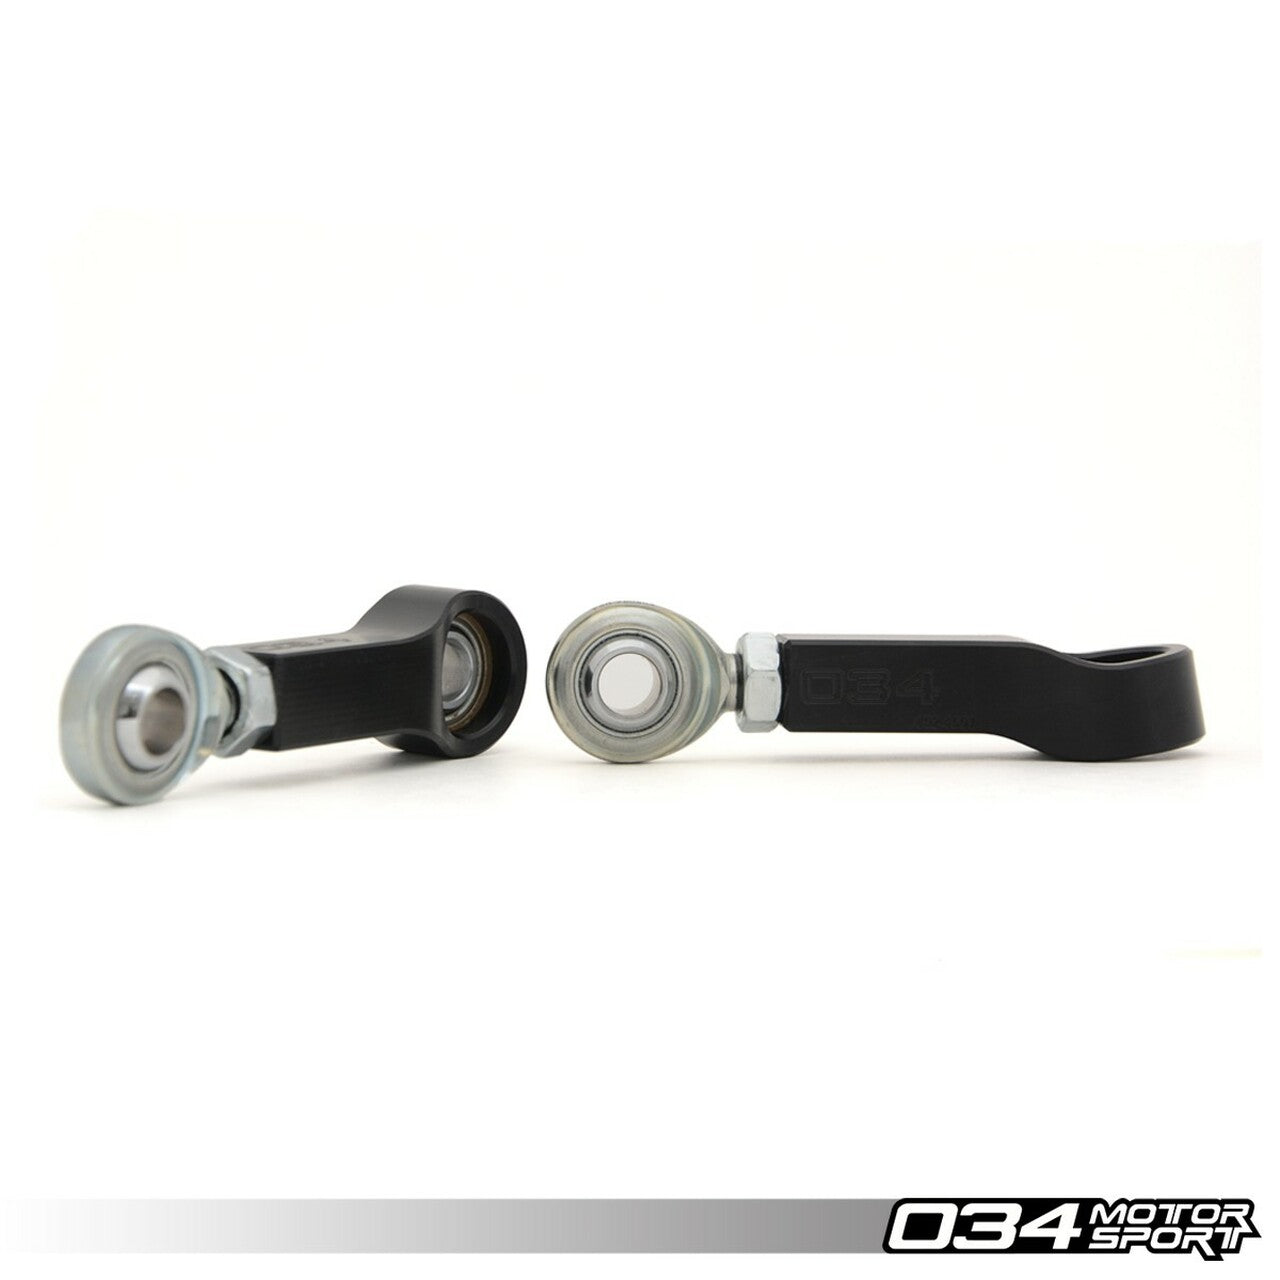 034Motorsport Adjustable Rear Anti Roll Bar Drop Links (PQ35) - Wayside Performance